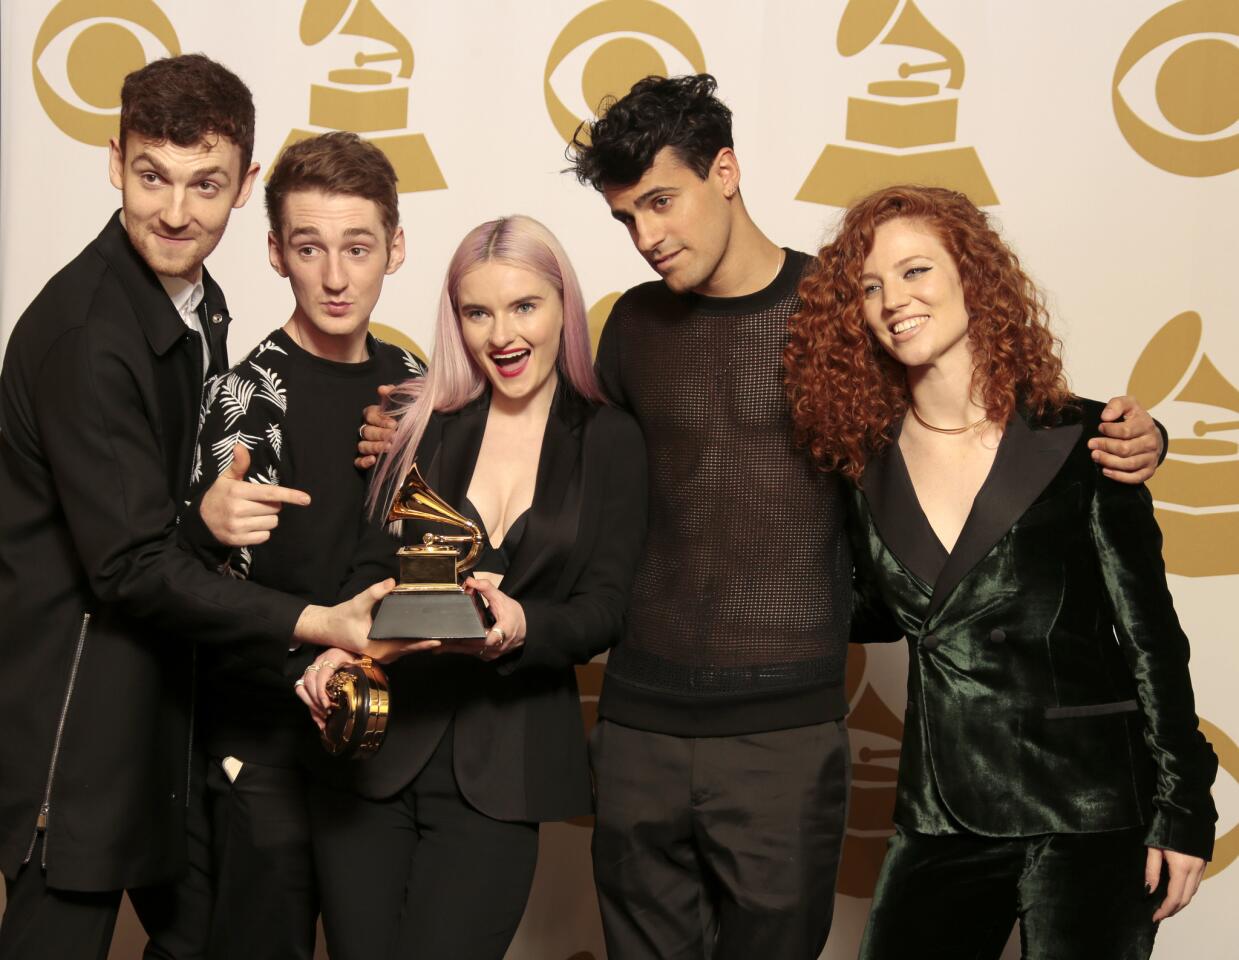 Grammys 2015: Backstage photos